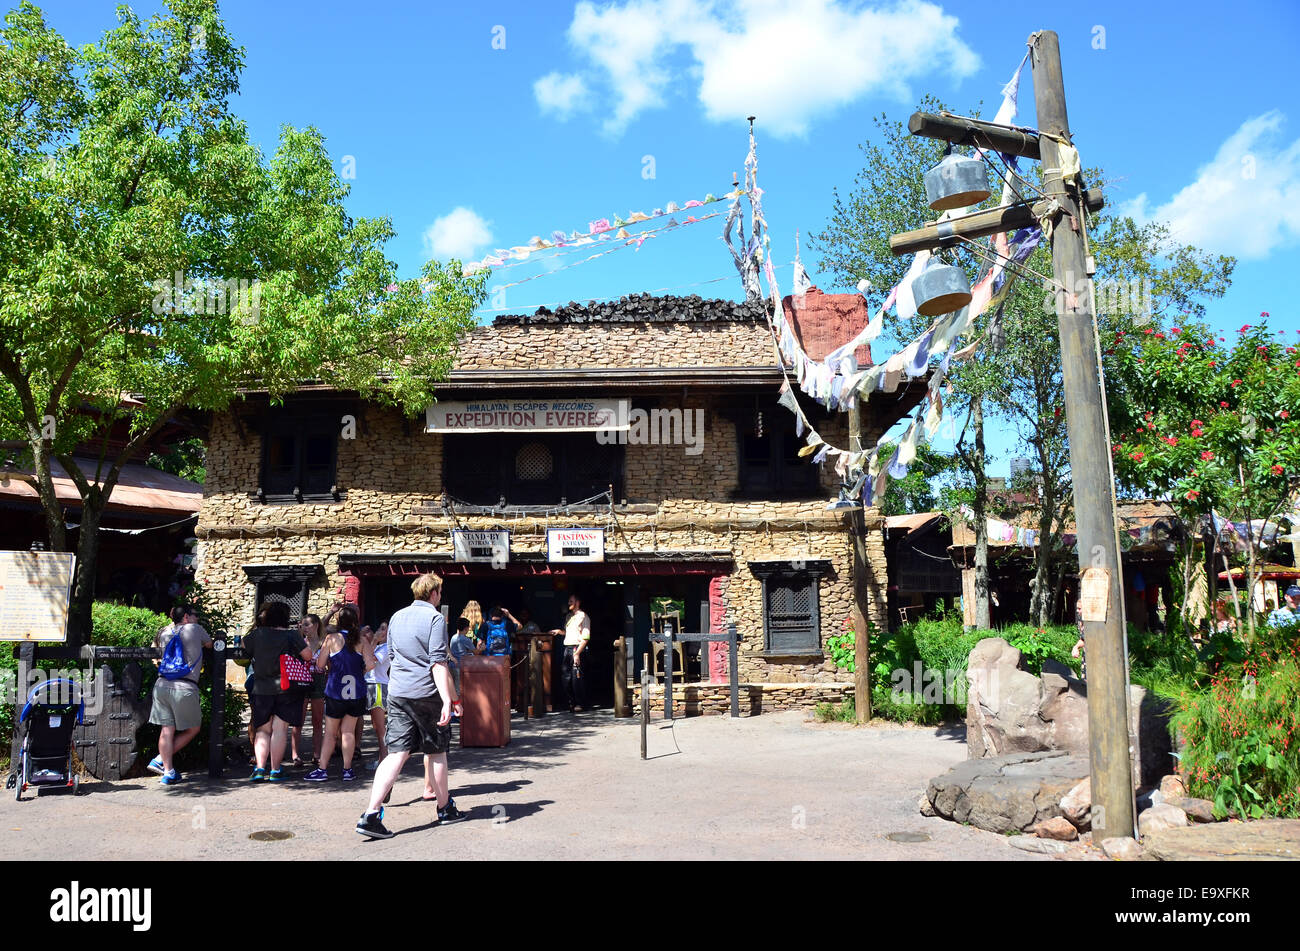 Entrance to Expedition Everest Ride at Disney's Animal Kingdom, Walt Disney World Resort, Orlando, Florida Stock Photo